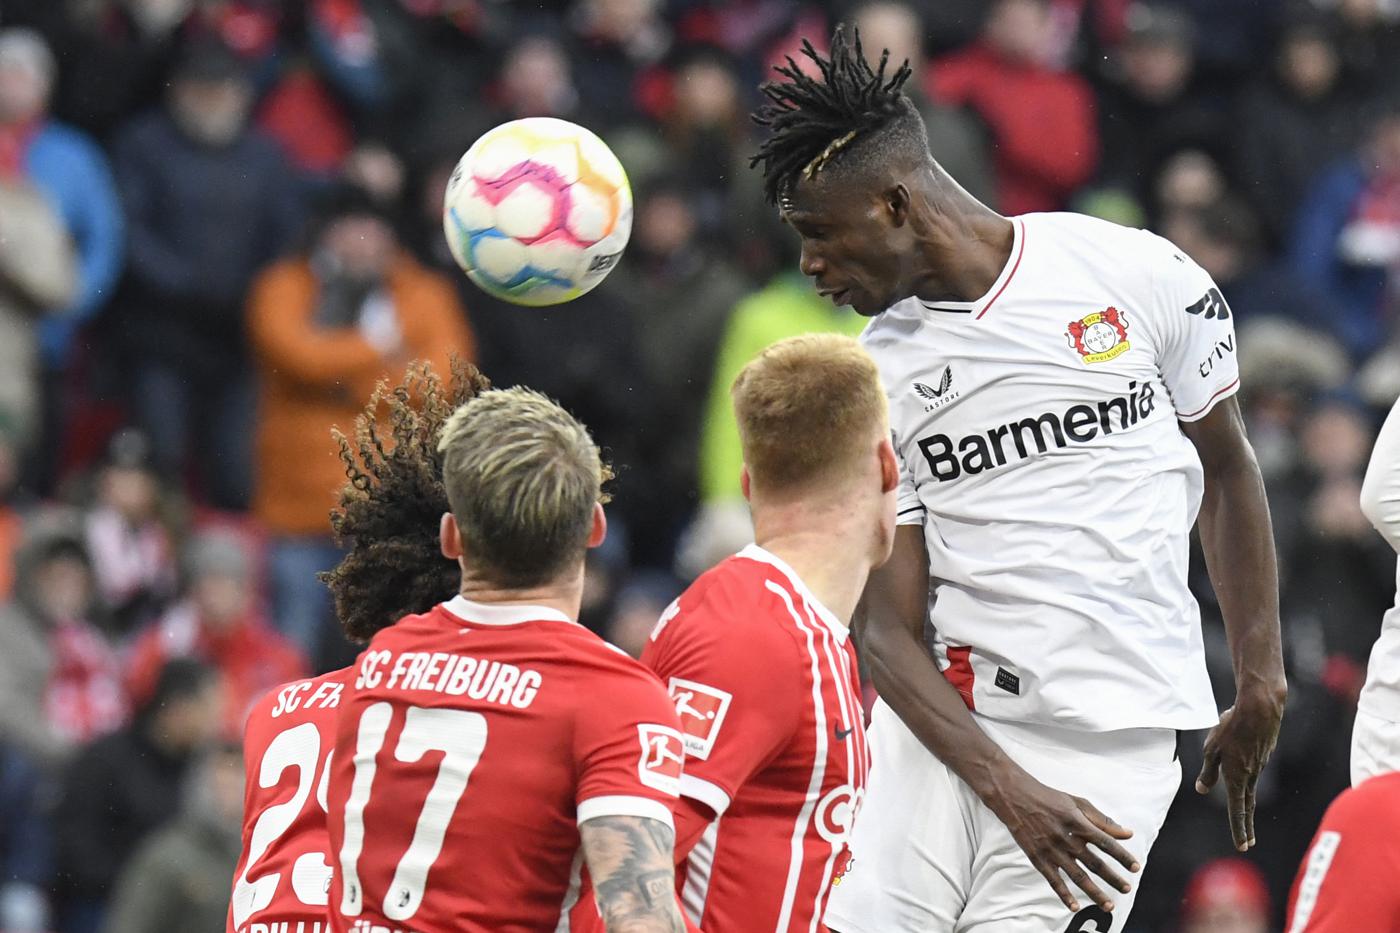 Freiburg v Bayer - 1:1. German Championship, round 22. Match review, statistics.